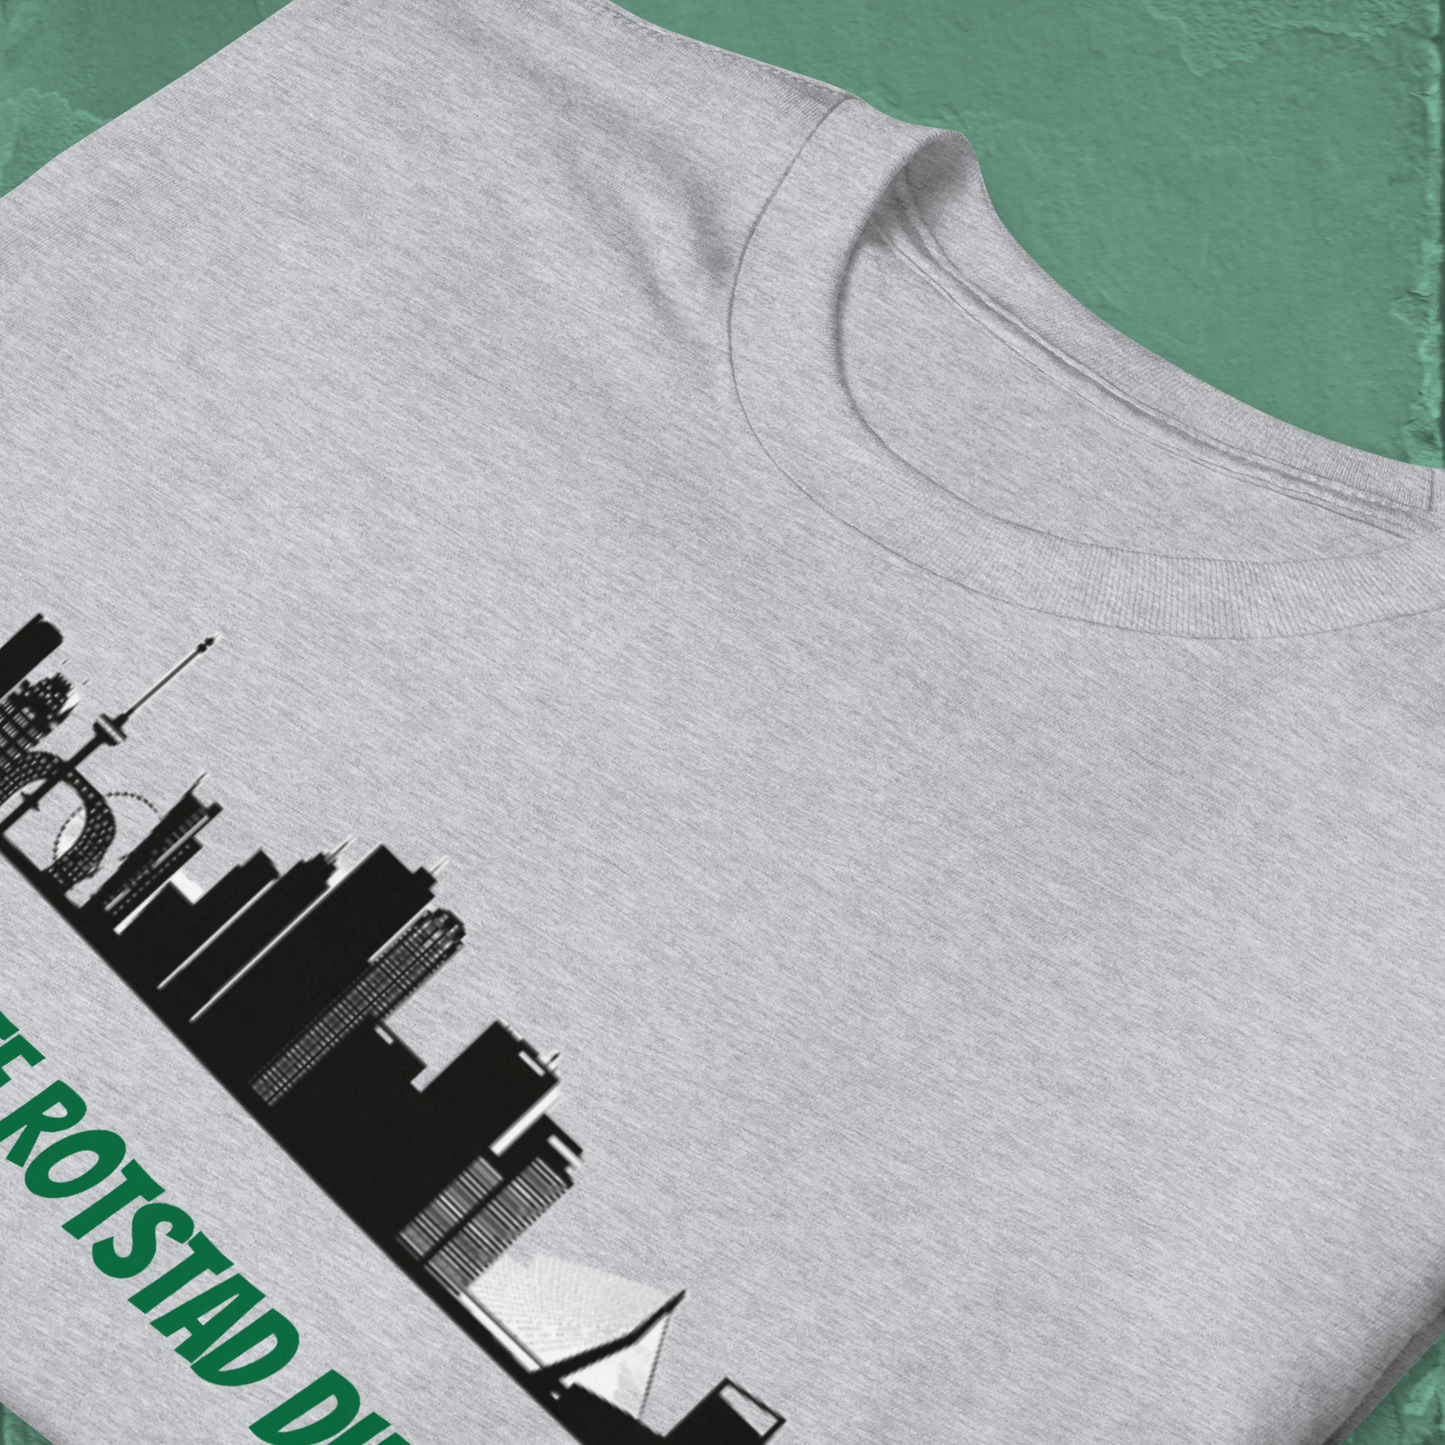 Rotterdam Skyline 🏙️ Unisex T-Shirt